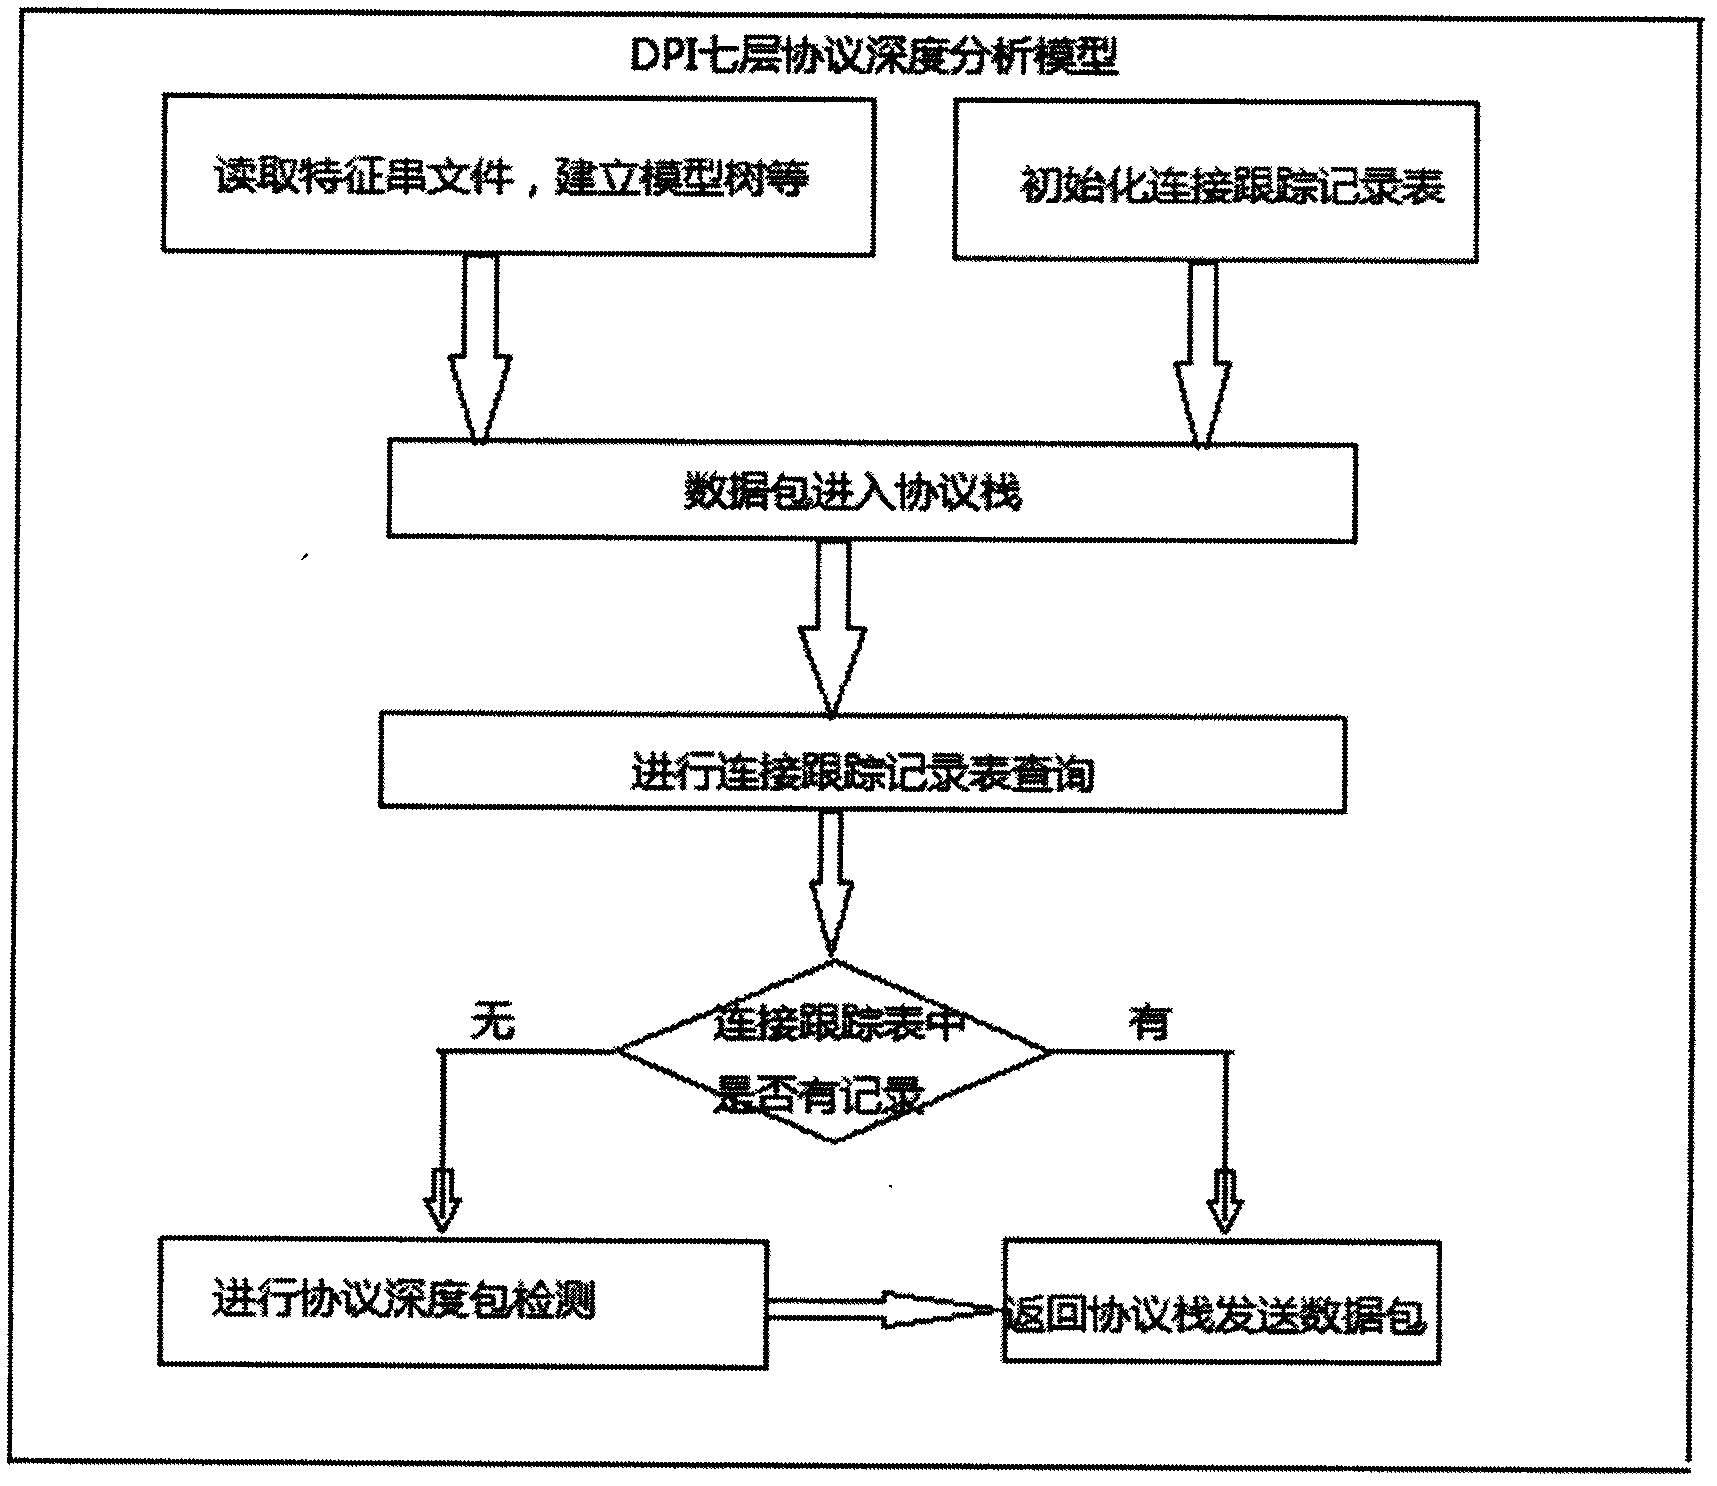 Application protocol analysis method based on DPI (Distributed Protocol Interface)